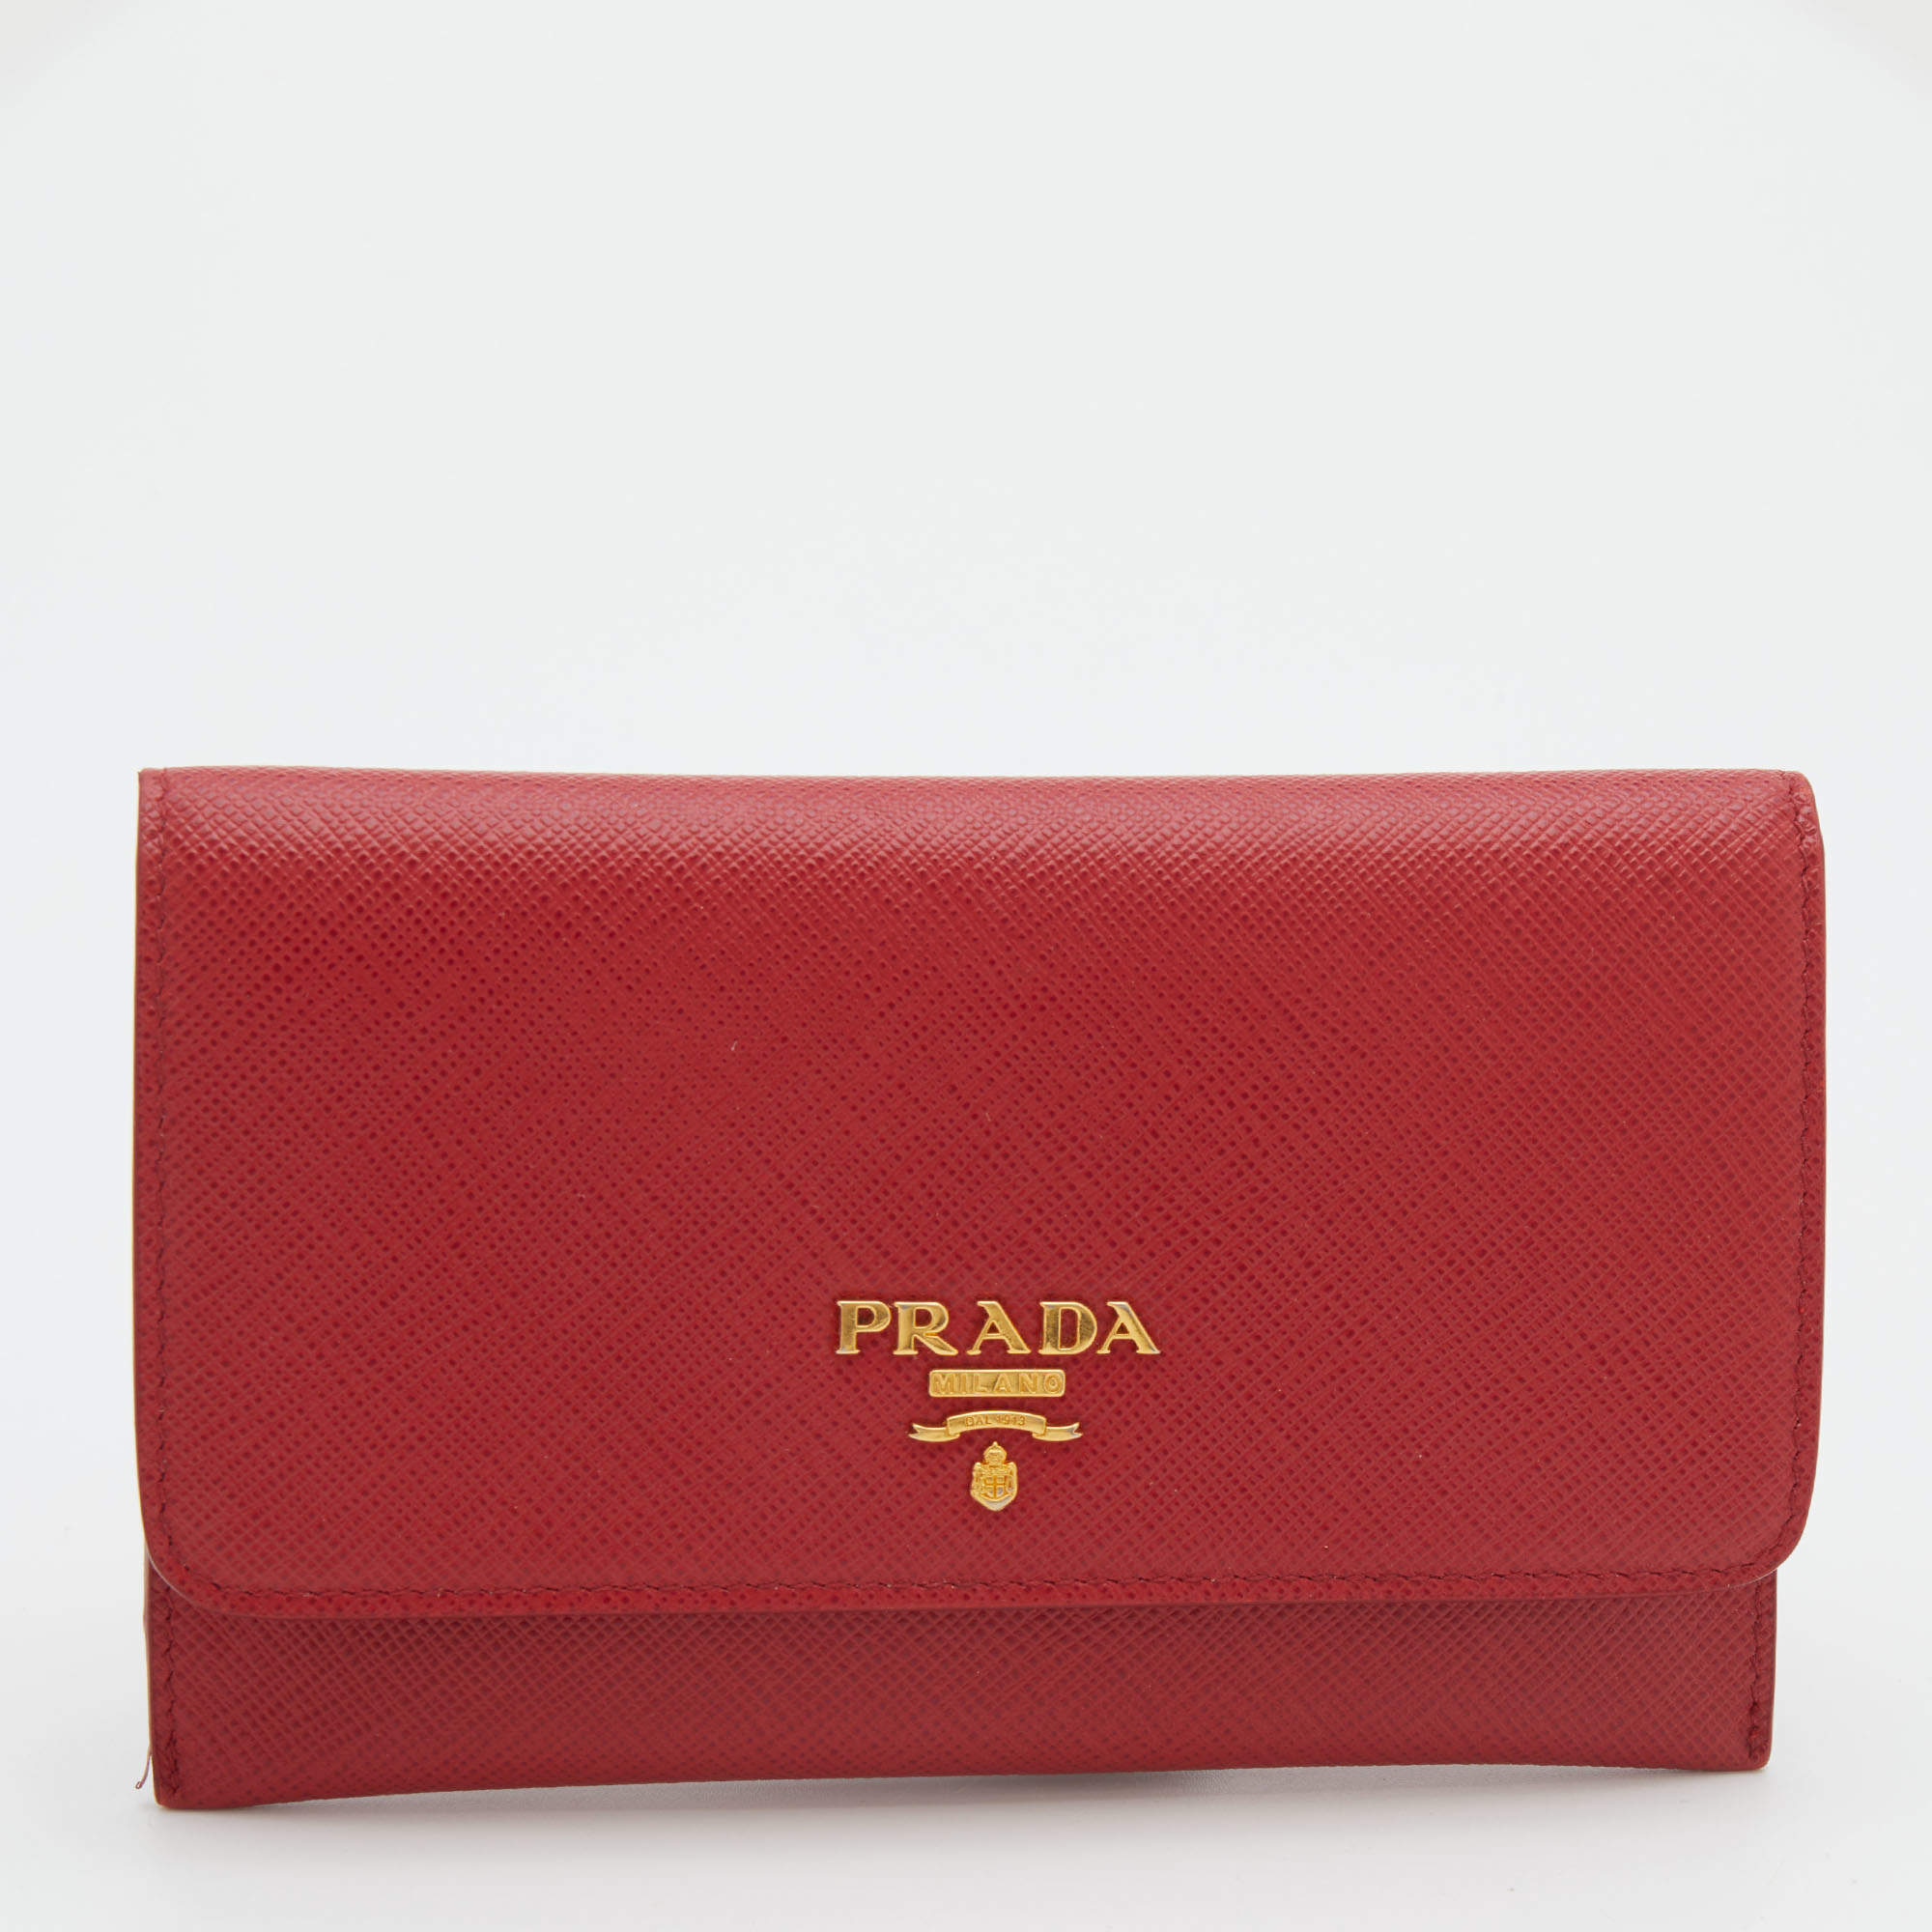 Prada Red Saffiano Leather Passport Cover Prada | The Luxury Closet